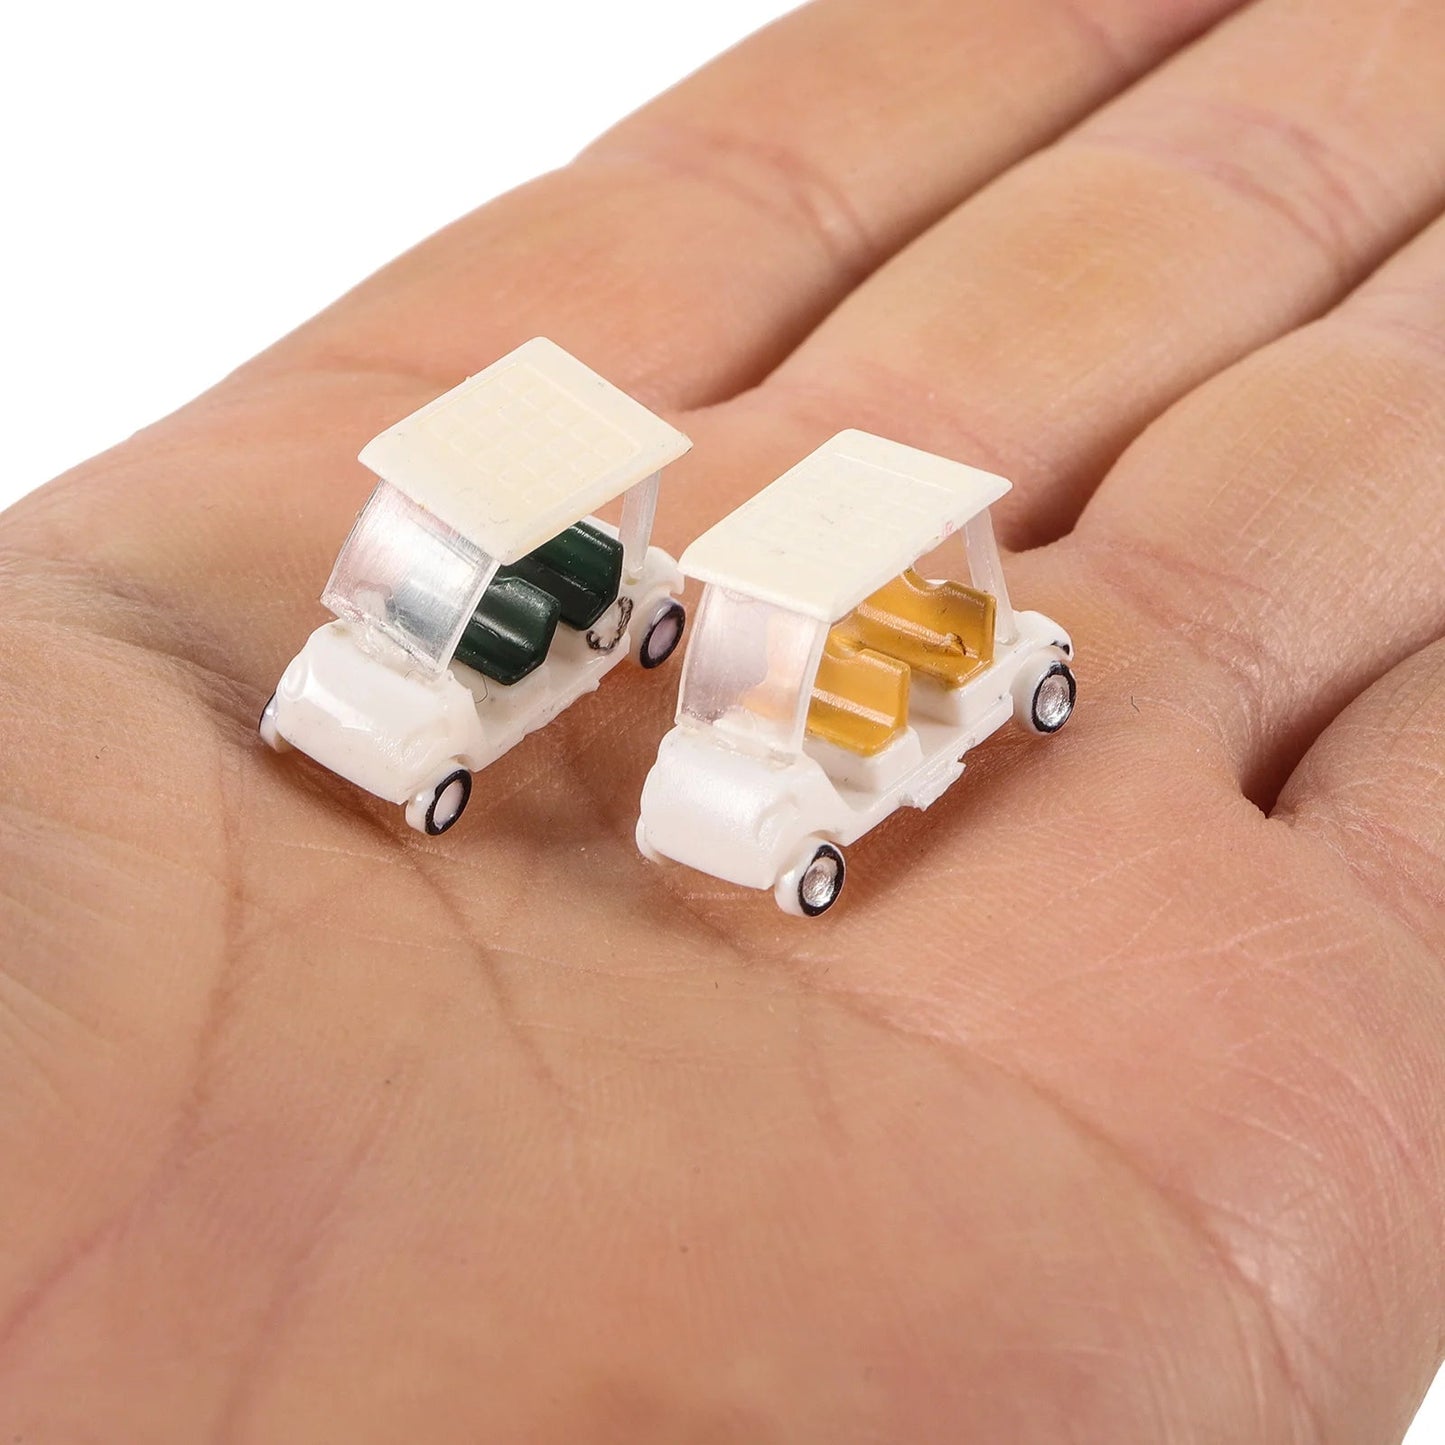 5 Miniature Resin Golf Cart Models with Realistic Details - ToylandEU